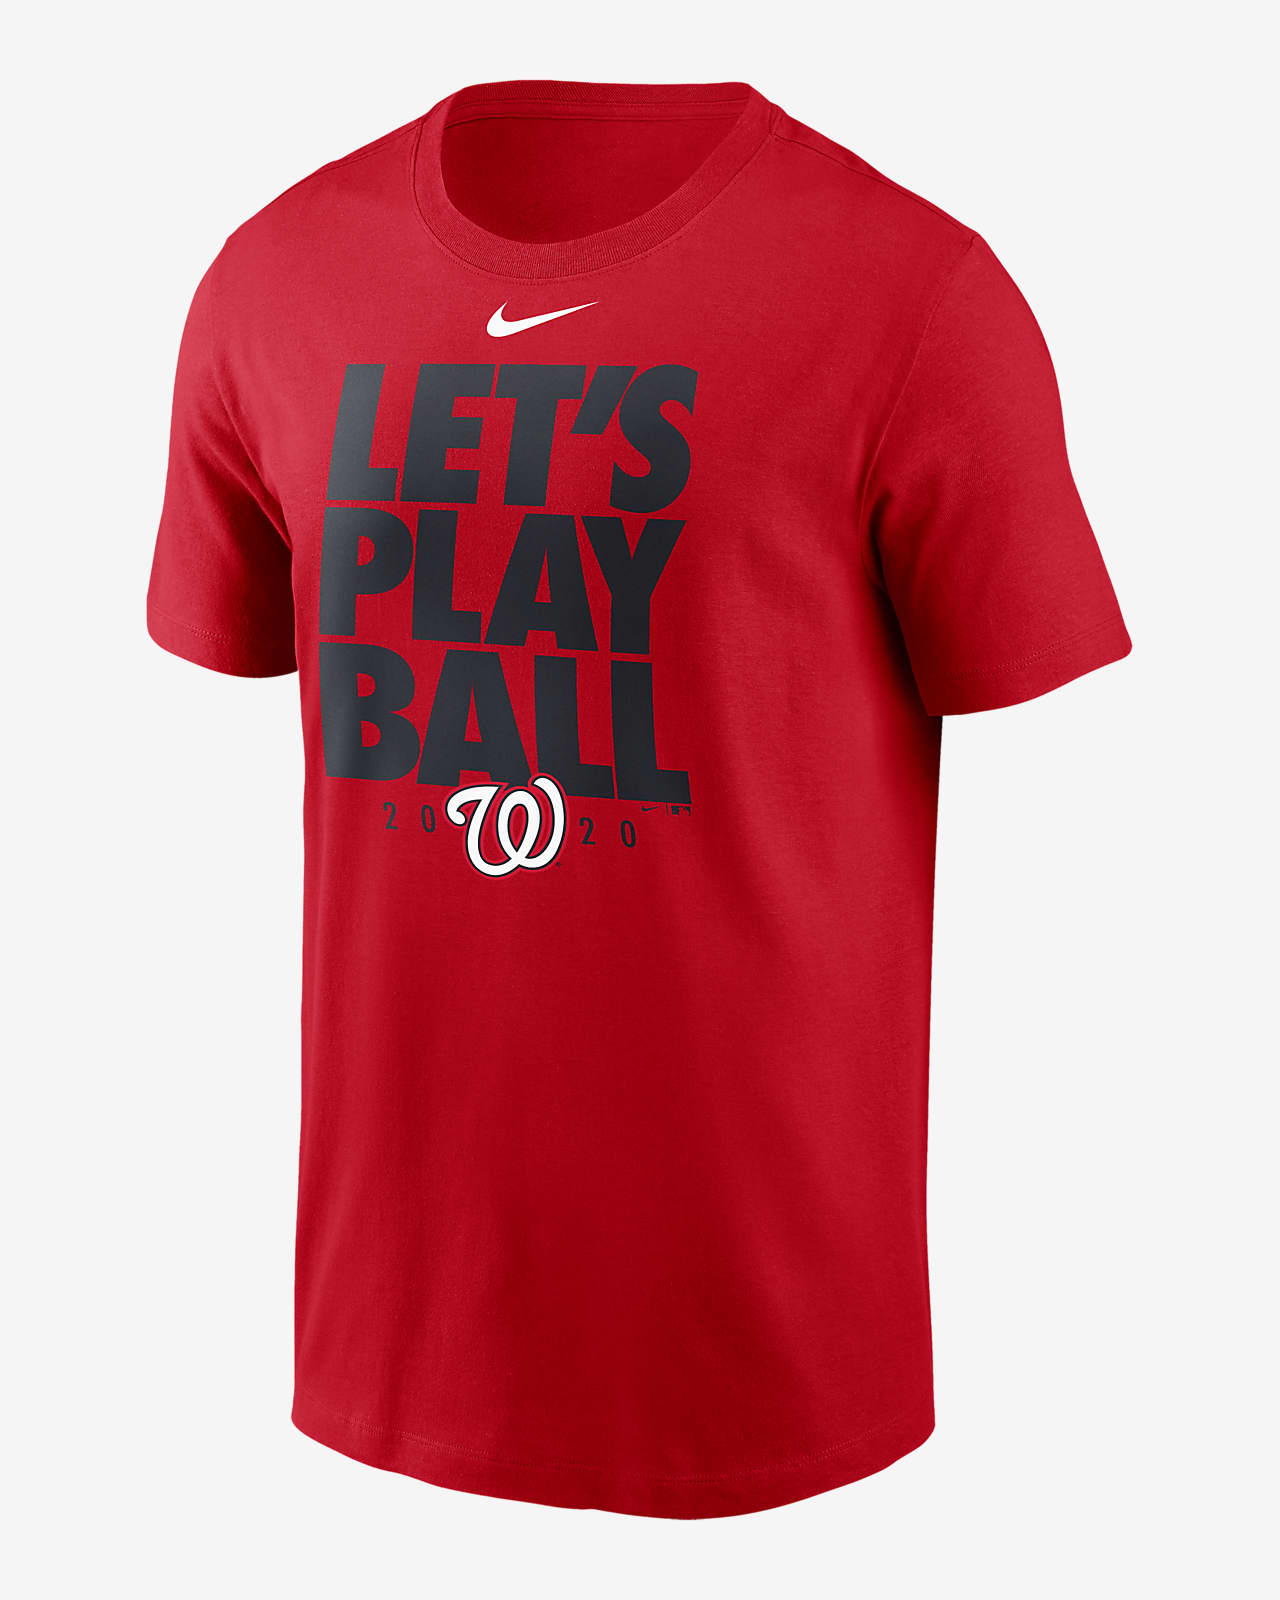 Nike (MLB Nationals) Men's T-Shirt 